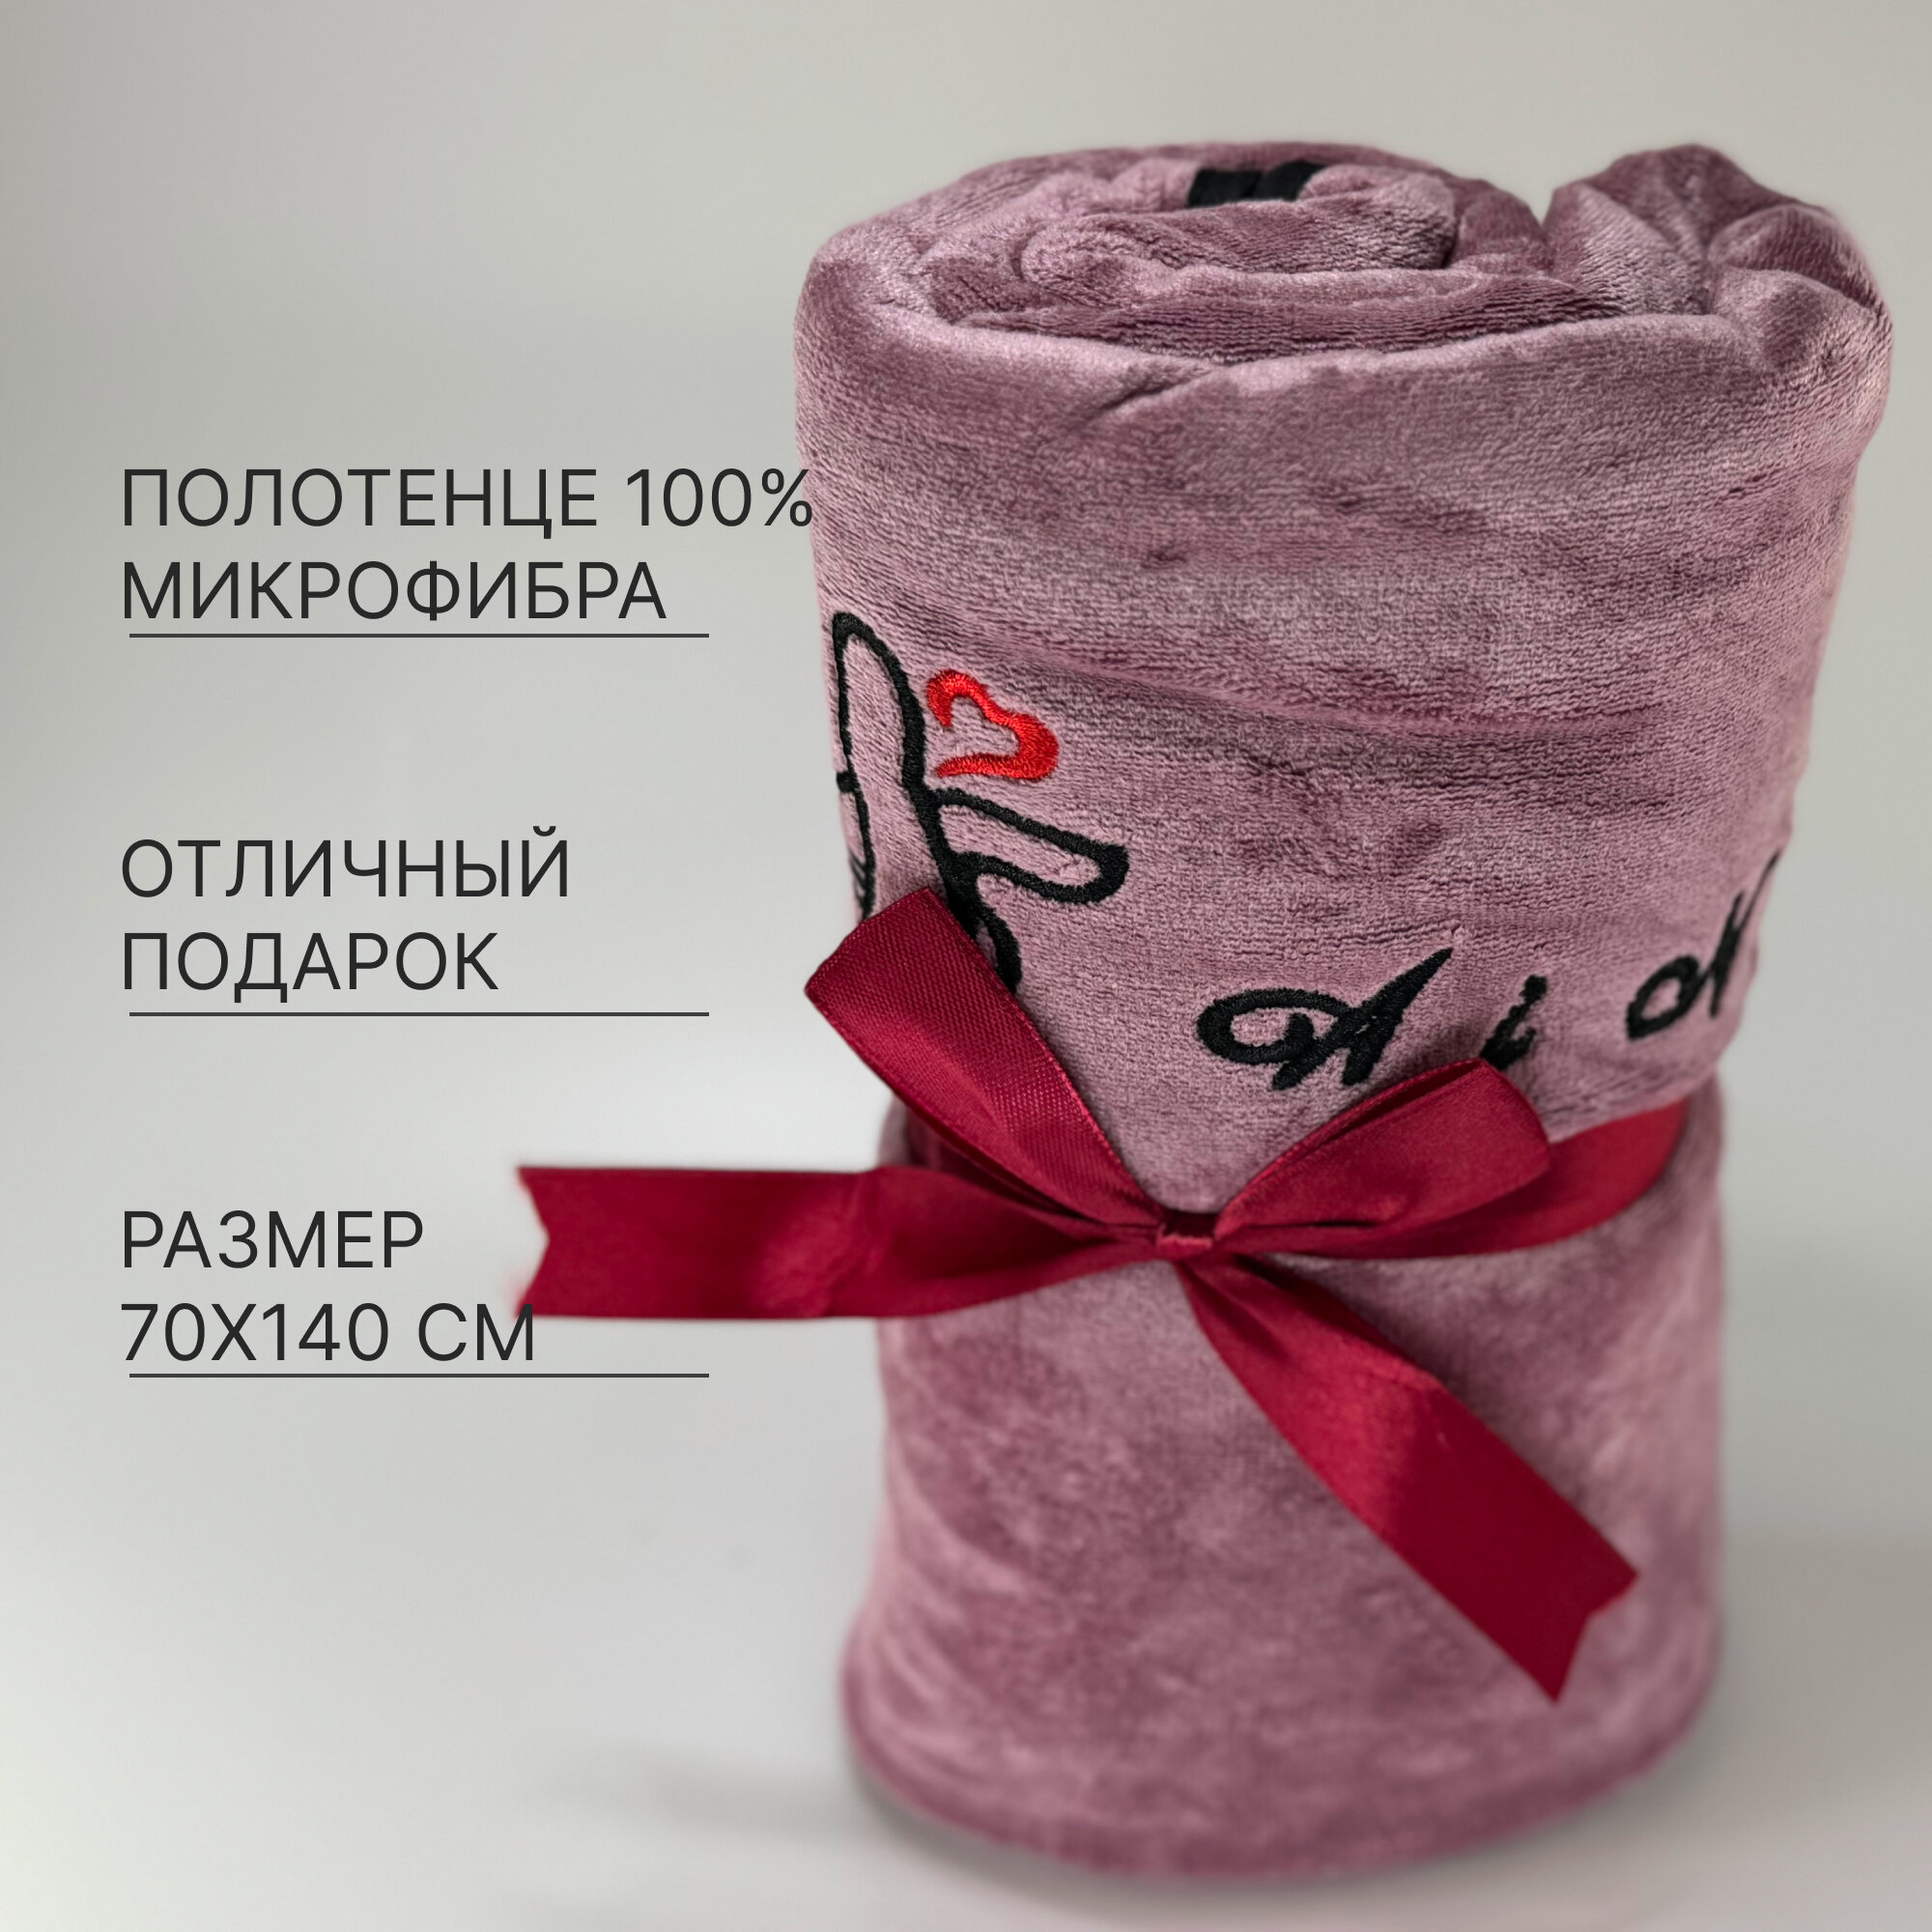 Полотенце микрофибра розовое 70х140 см